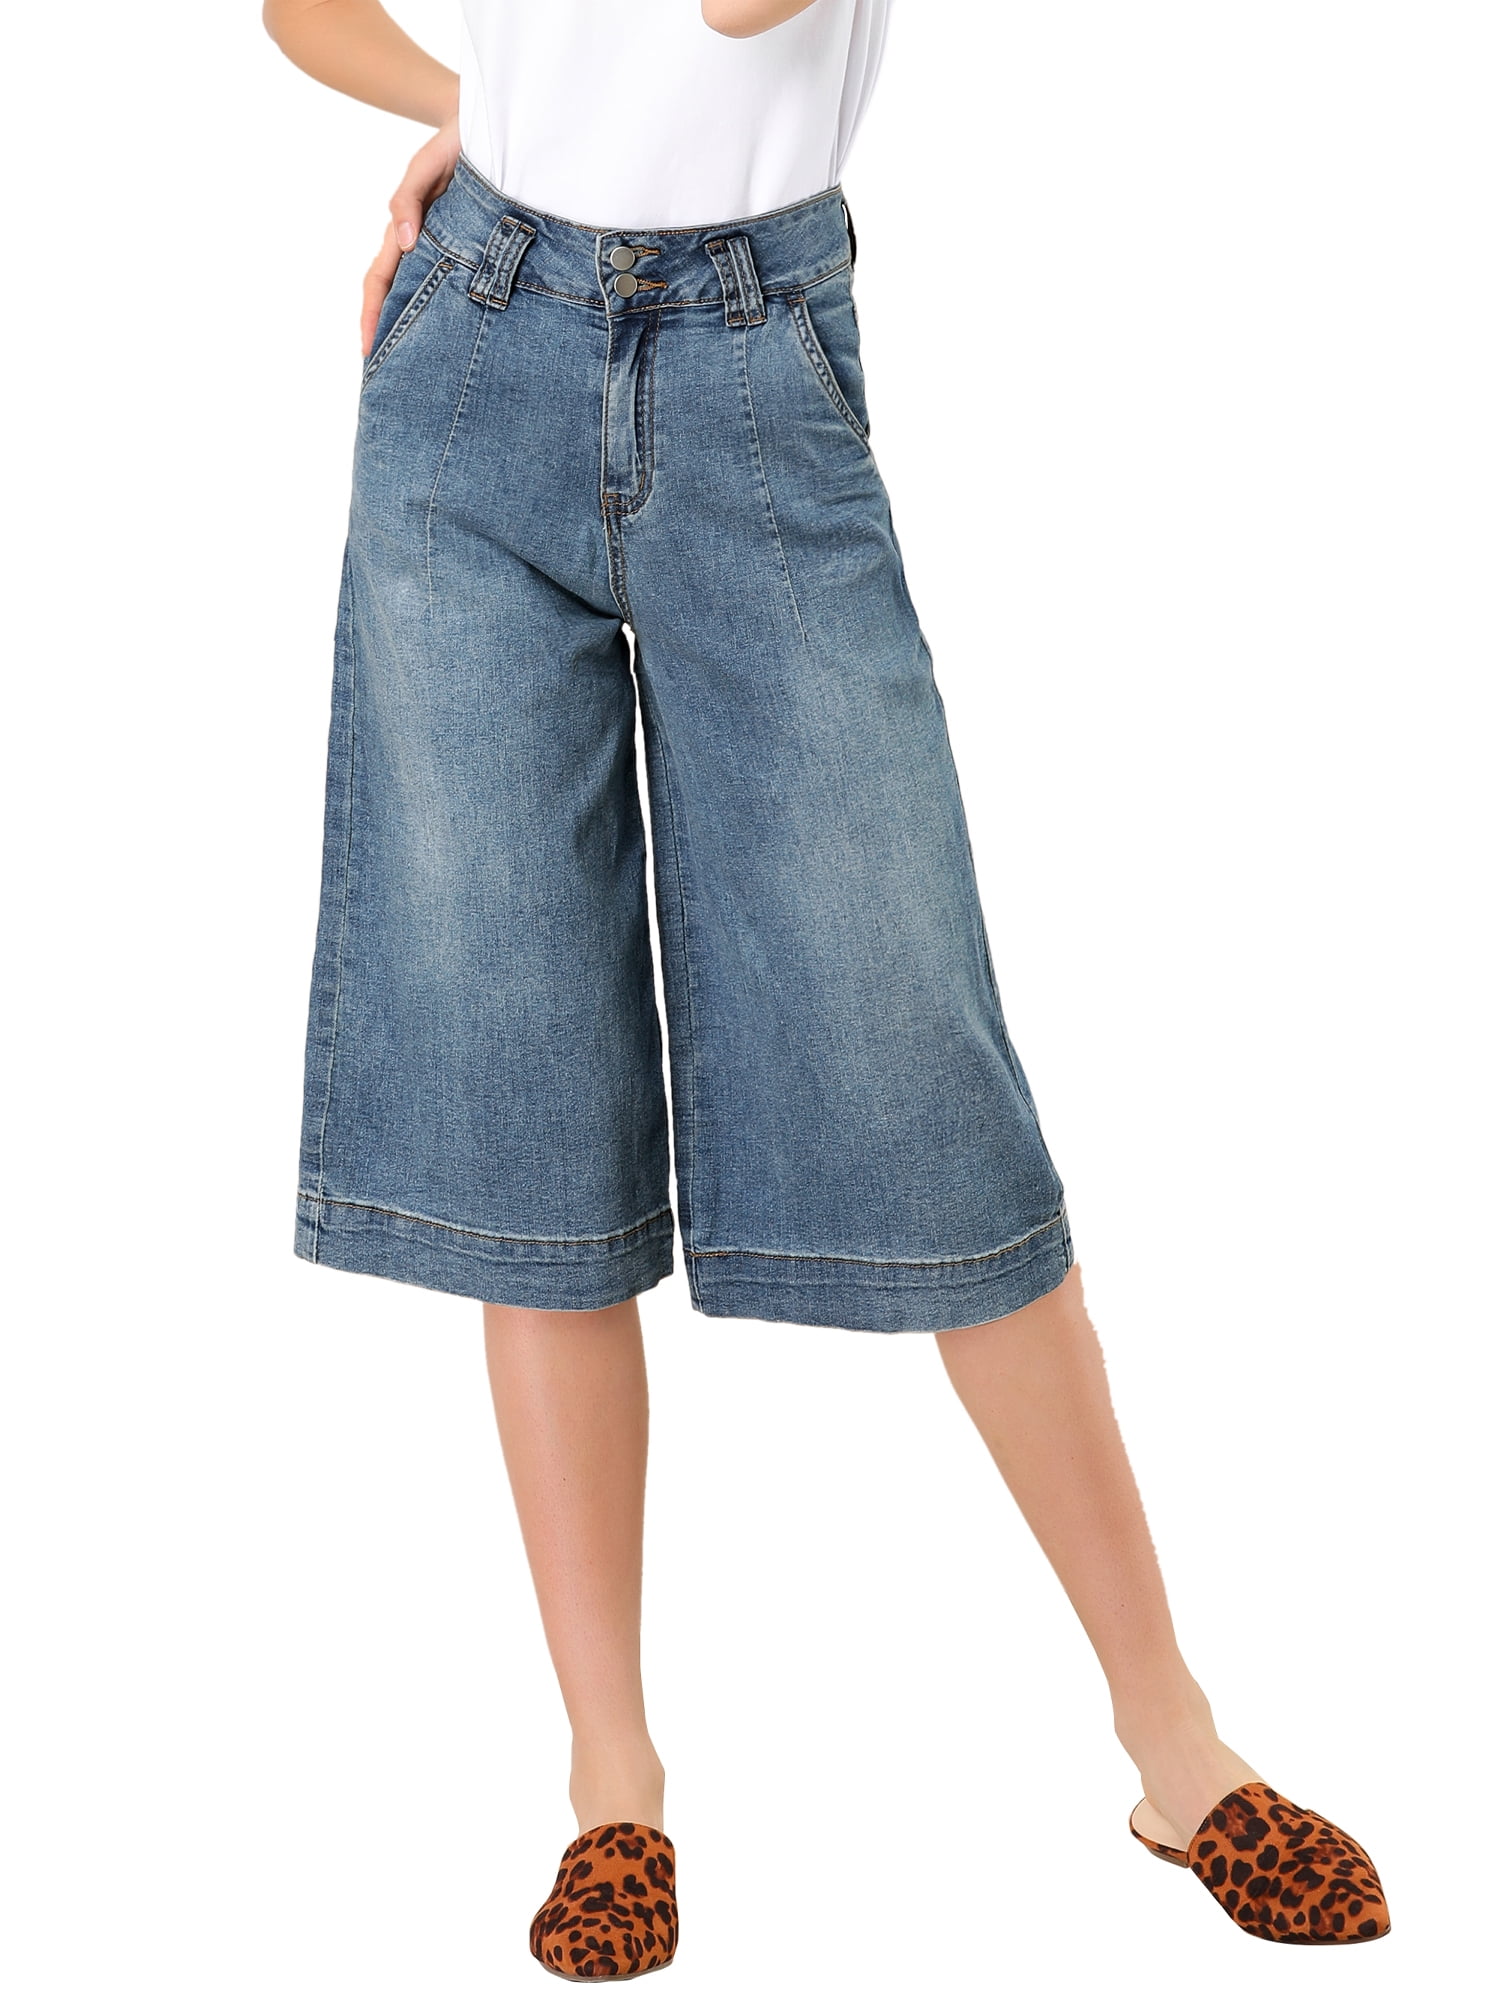 Domple Womens Stretch Slim Tassels Casual High Waist Denim Shorts Jeans